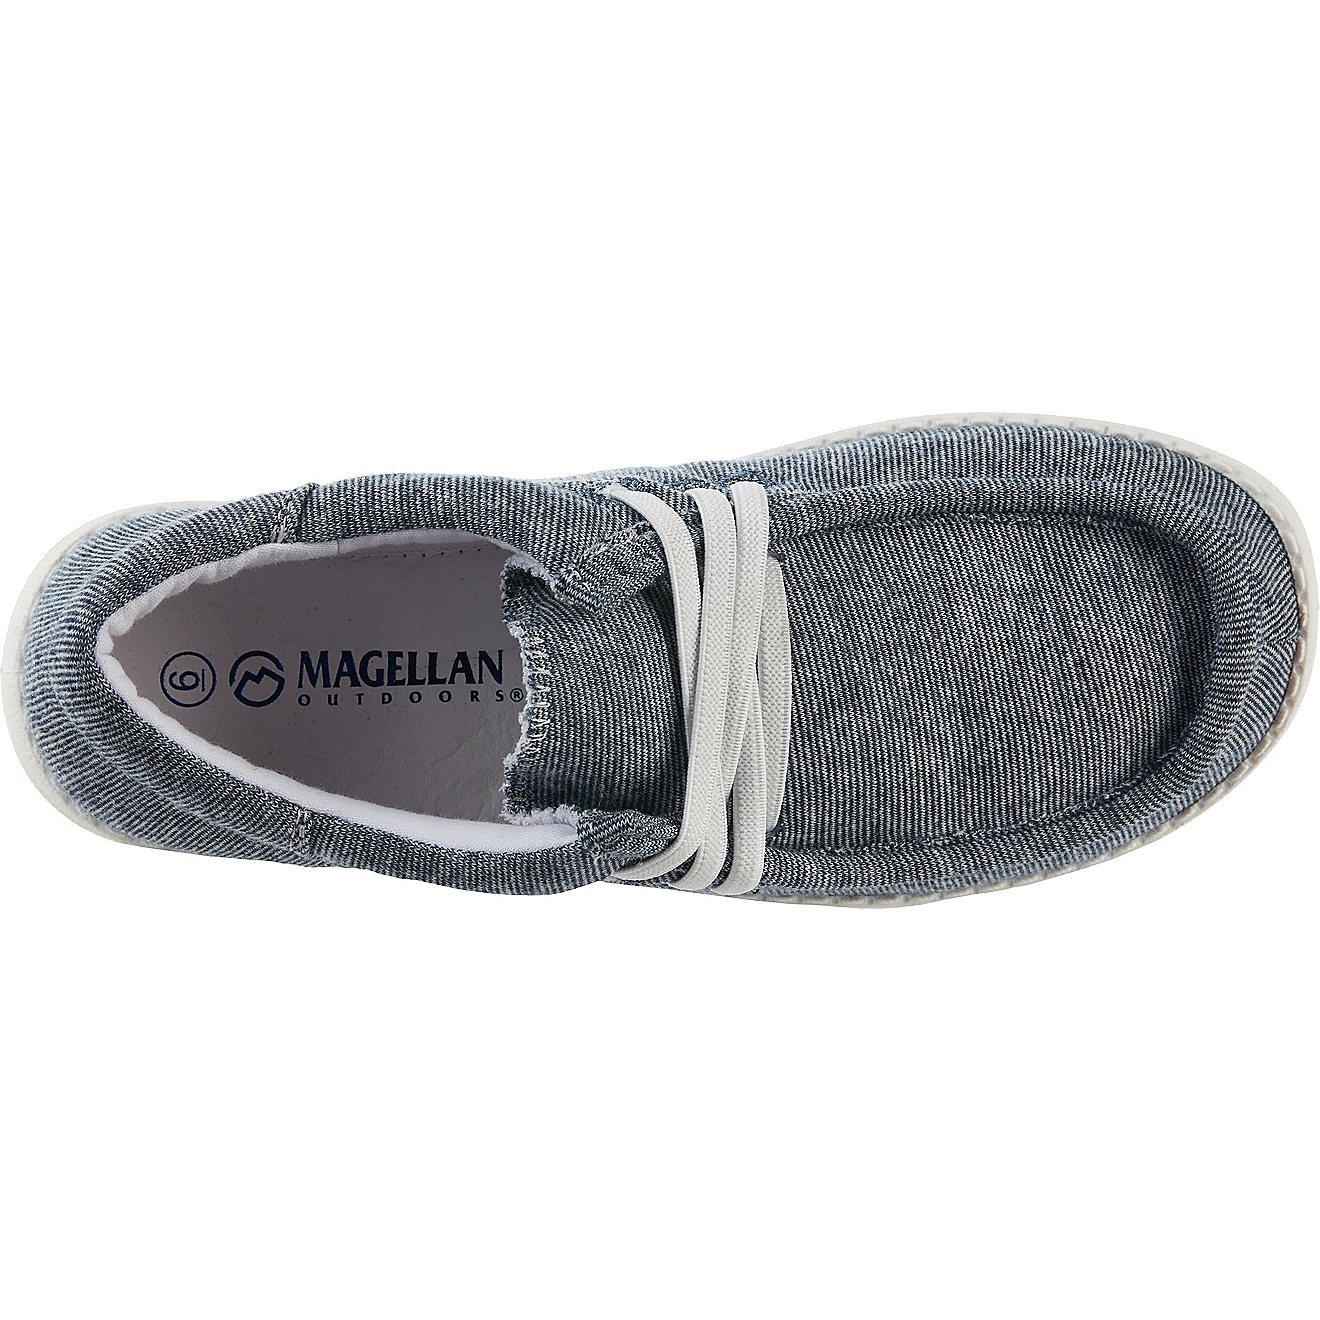 Magellan Outdoors Women's Moc Toe Shoes | Academy